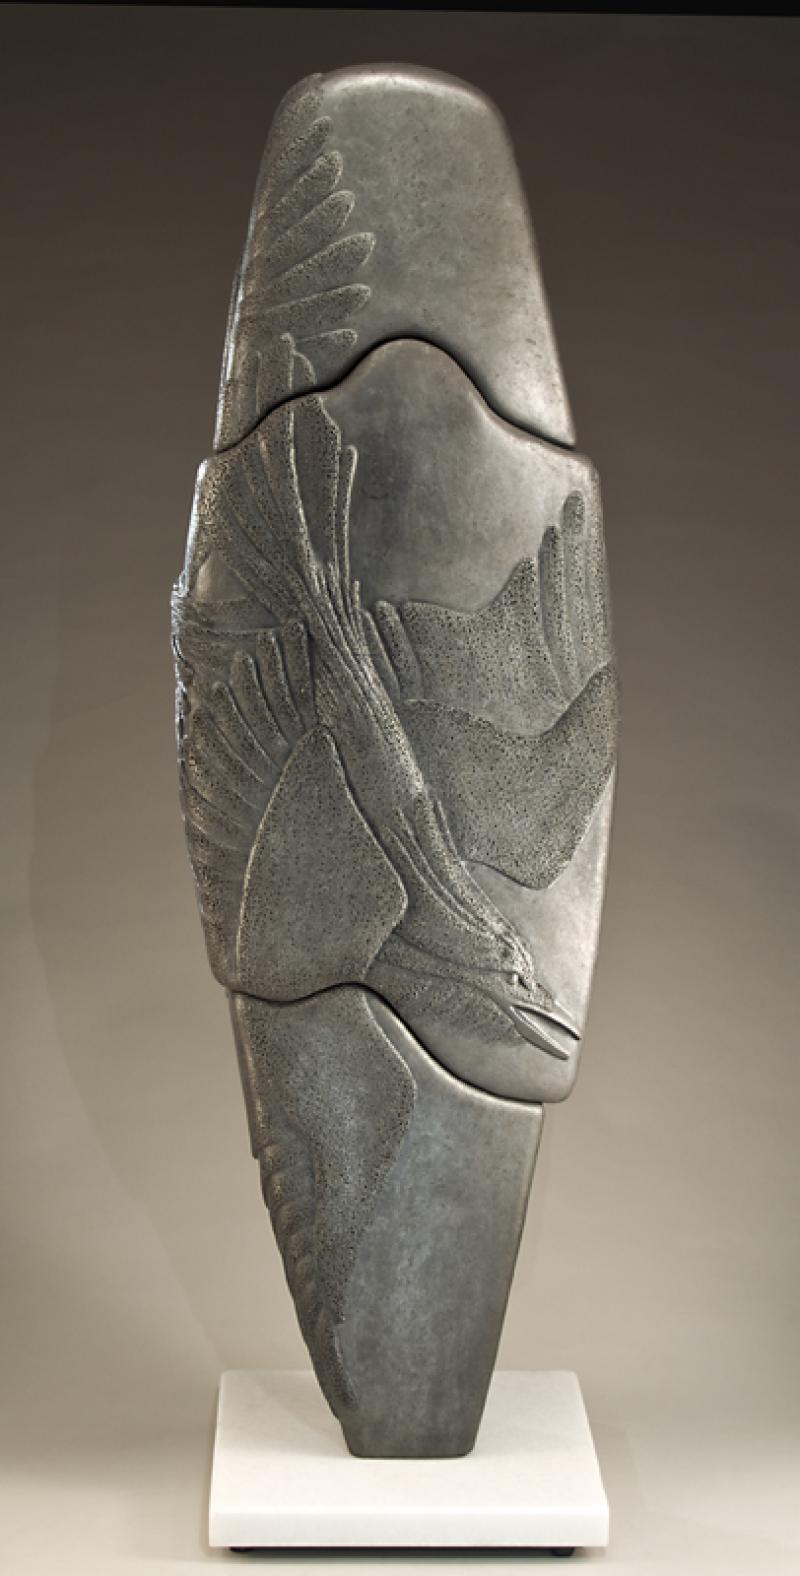 Raku Raven Monolith, raku fired clay